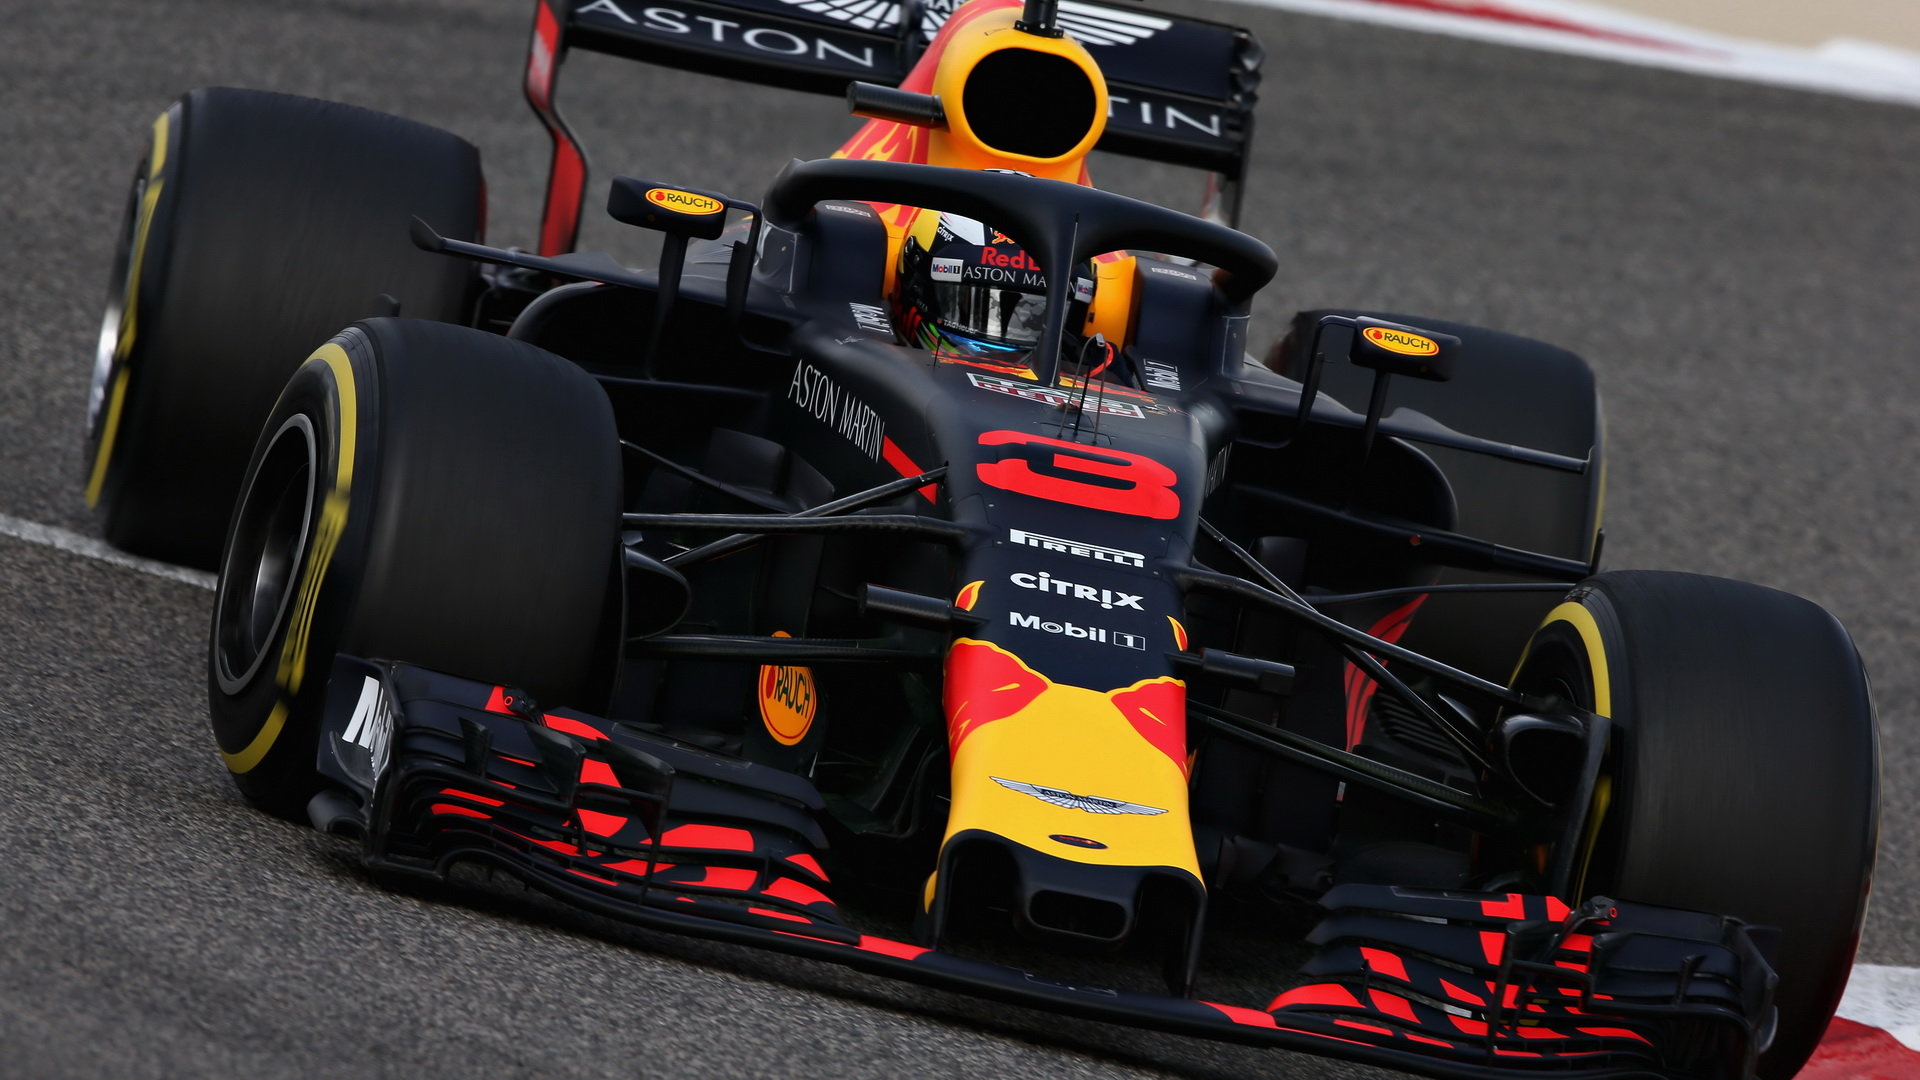 Daniel Ricciardo v tréninku v Bahrajnu